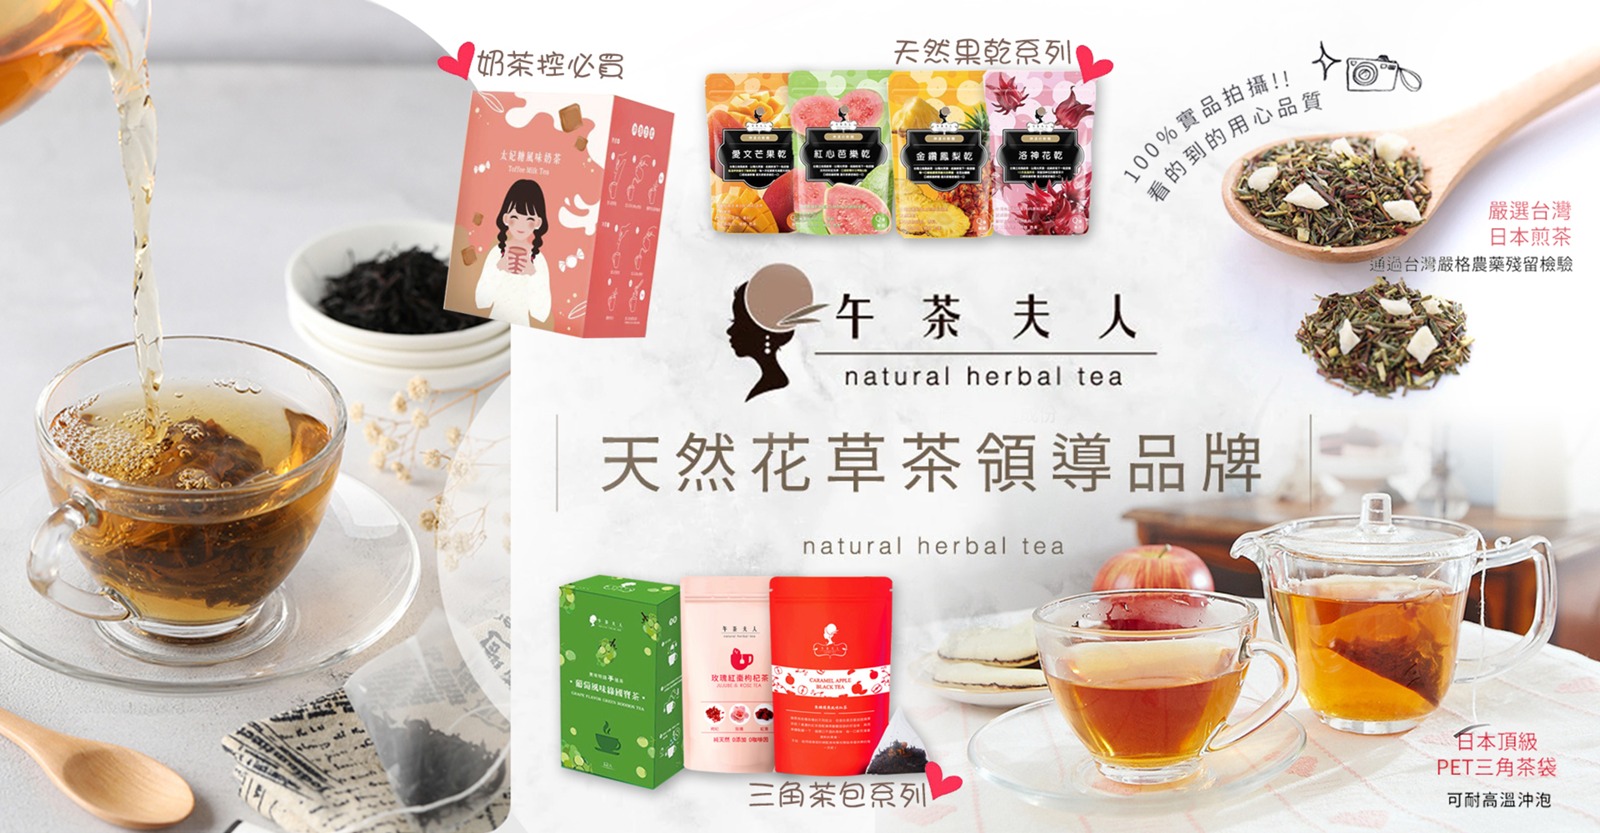 【ENJOY TEA TIME】午茶夫人 茶包系列